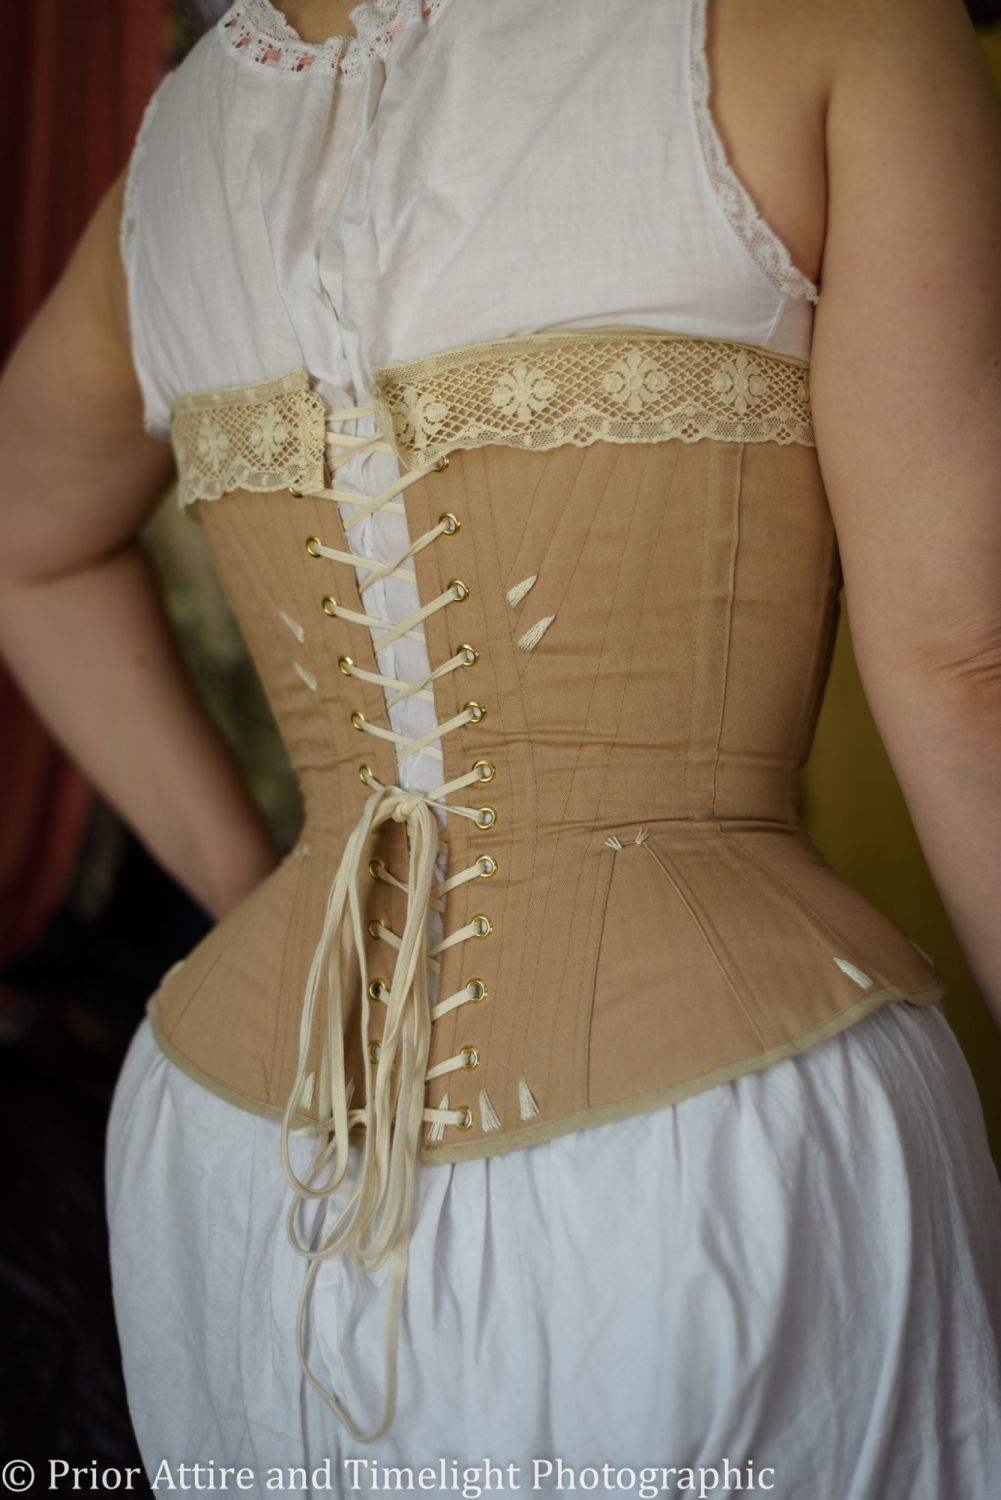 Victorian riding corset